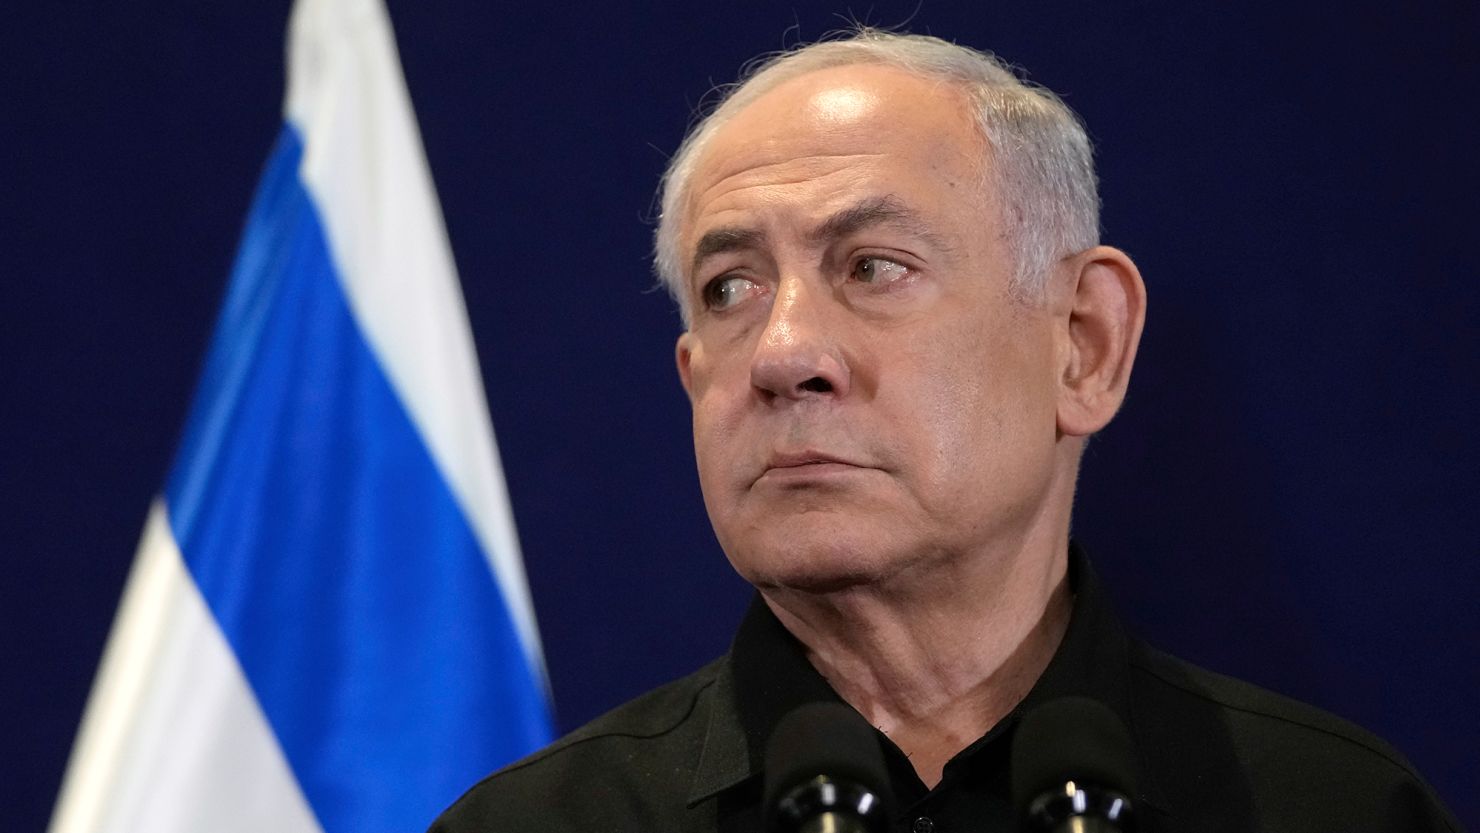 Israeli Prime Minister Benjamin Netanyahu attends a press conference in Tel Aviv, Israel, on October 17. 